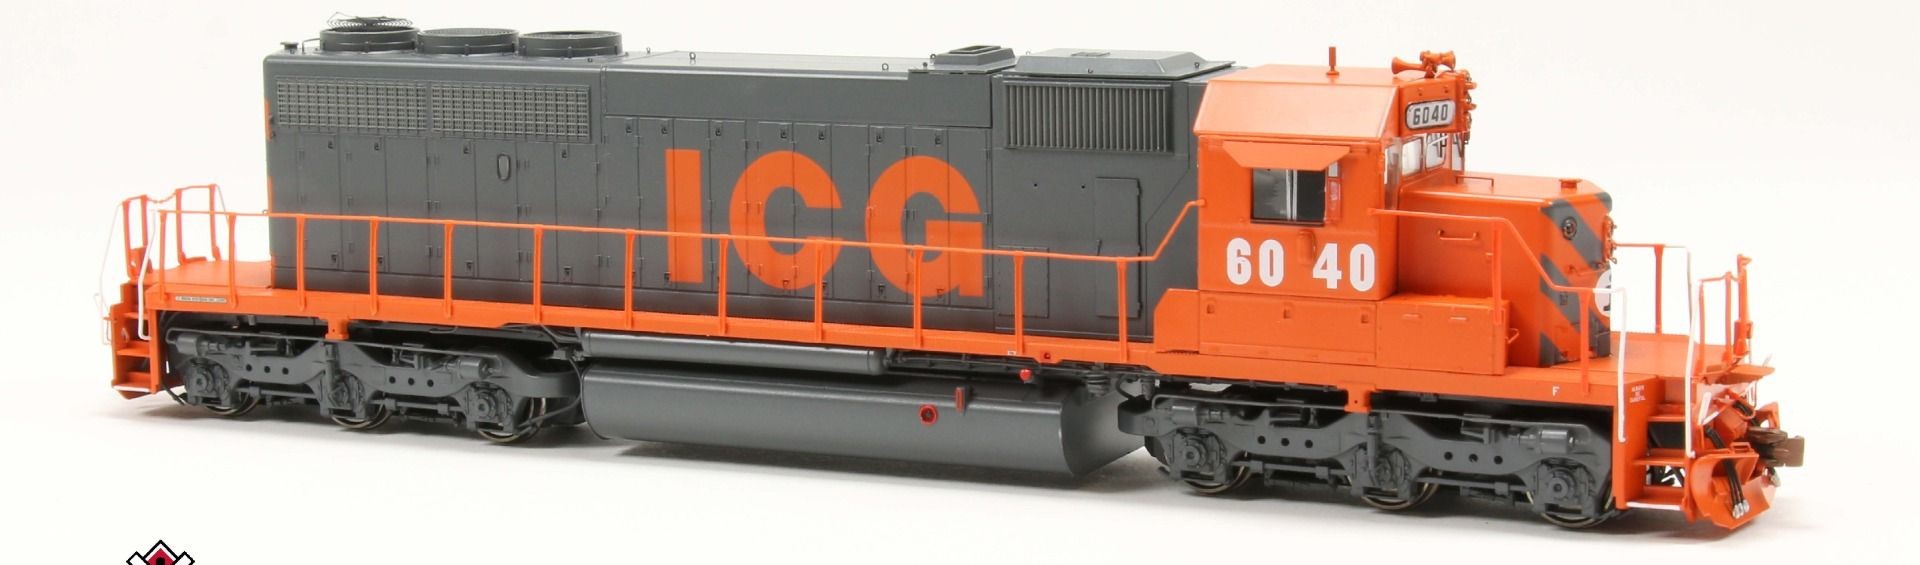 ScaleTrains Rivet Counter HO SXT38804 DCC Ready EMD SD40-2 Locomotive ICG 'Orange & Gray' ICG #6040